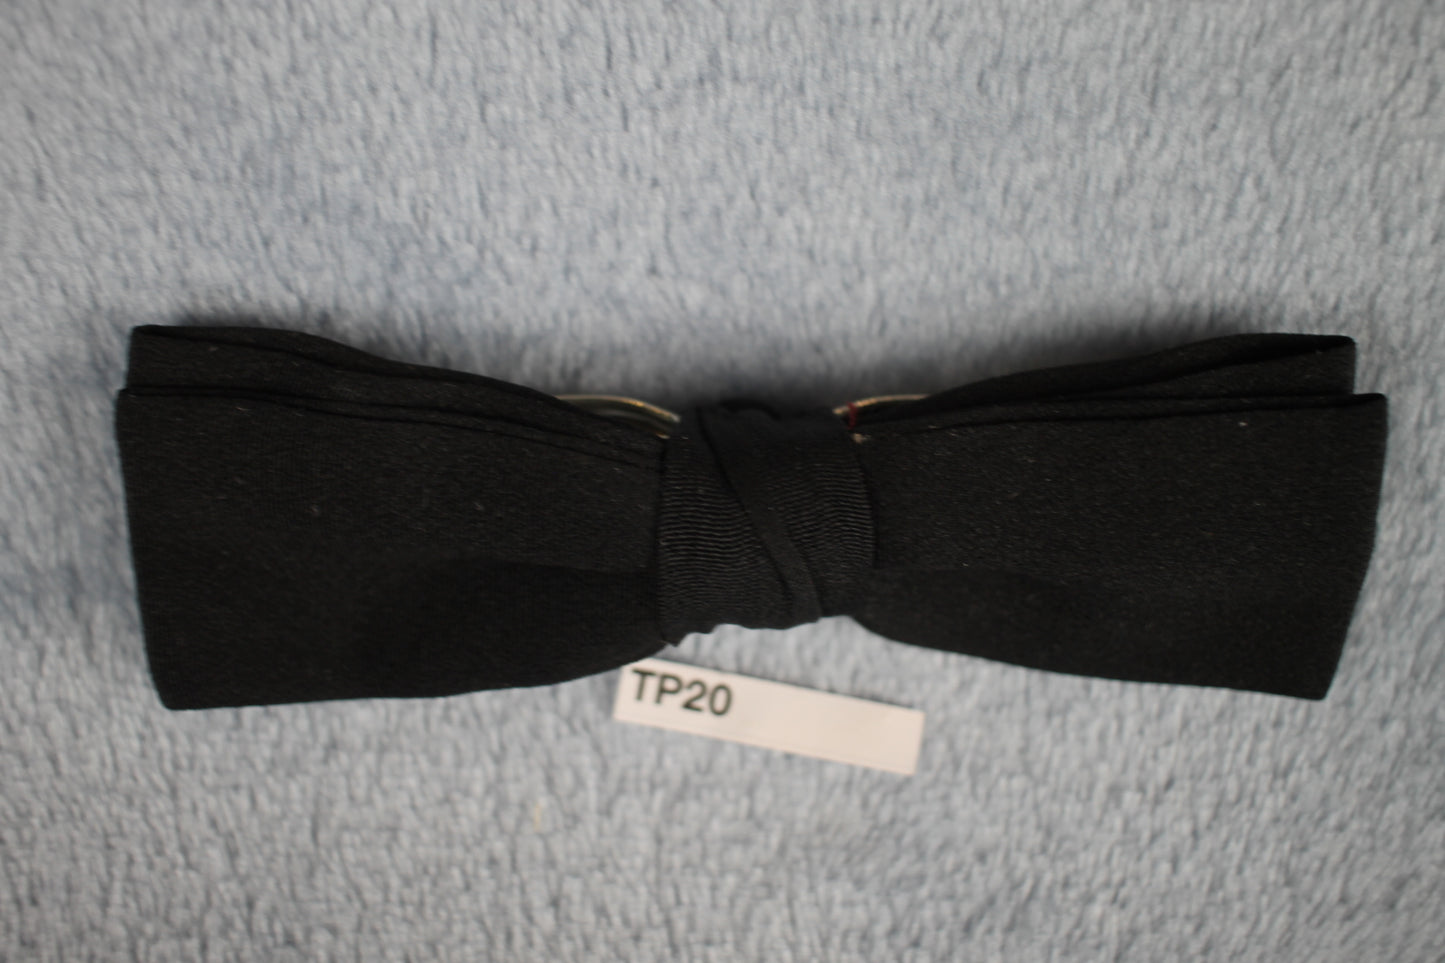 Vintage classic black clip on bow tie